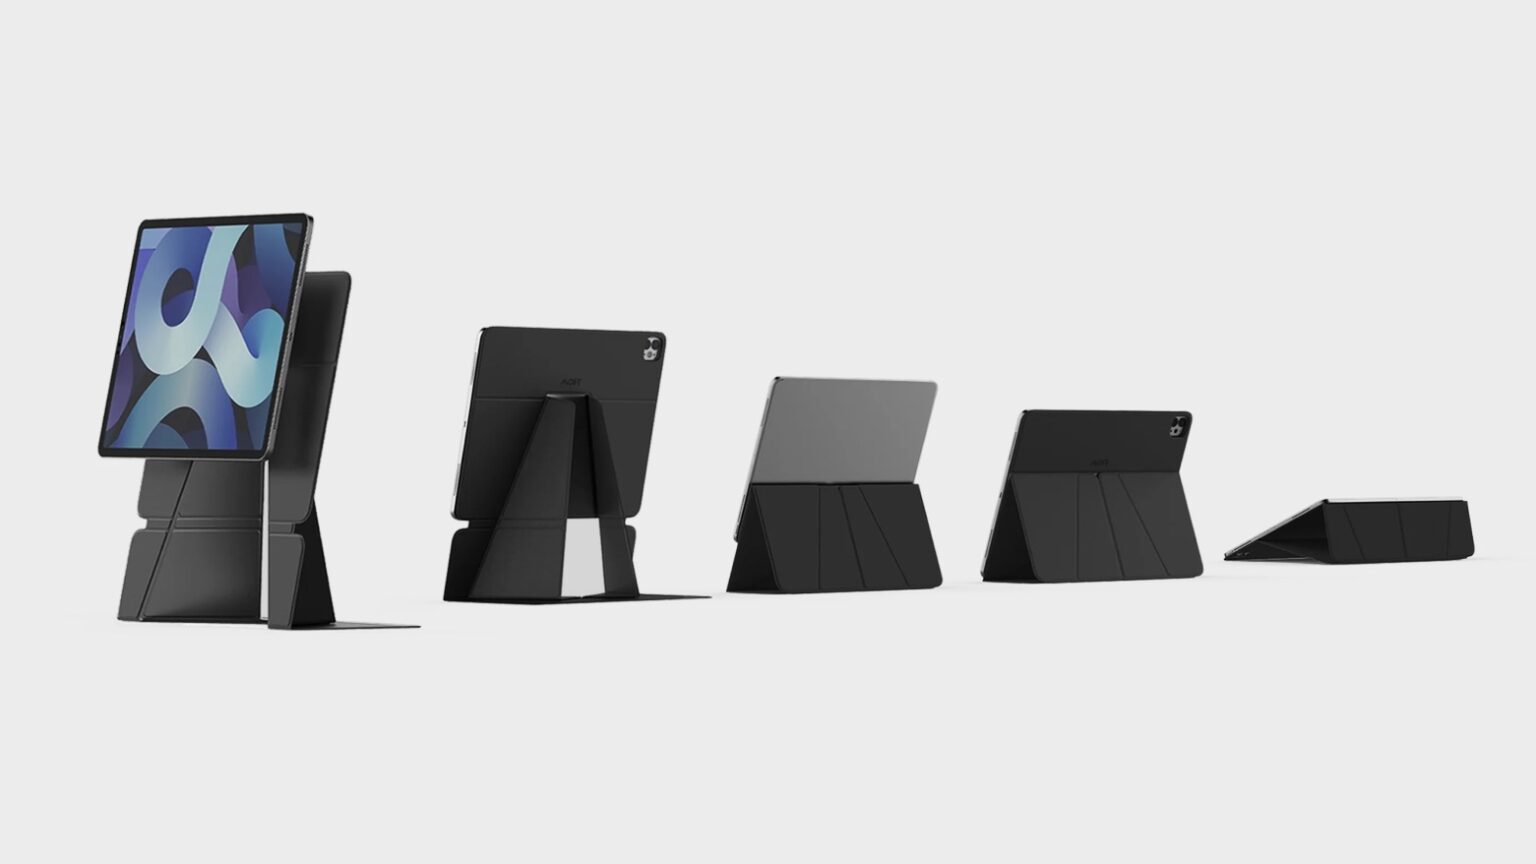 Origami case/stand raises iPad to eye level